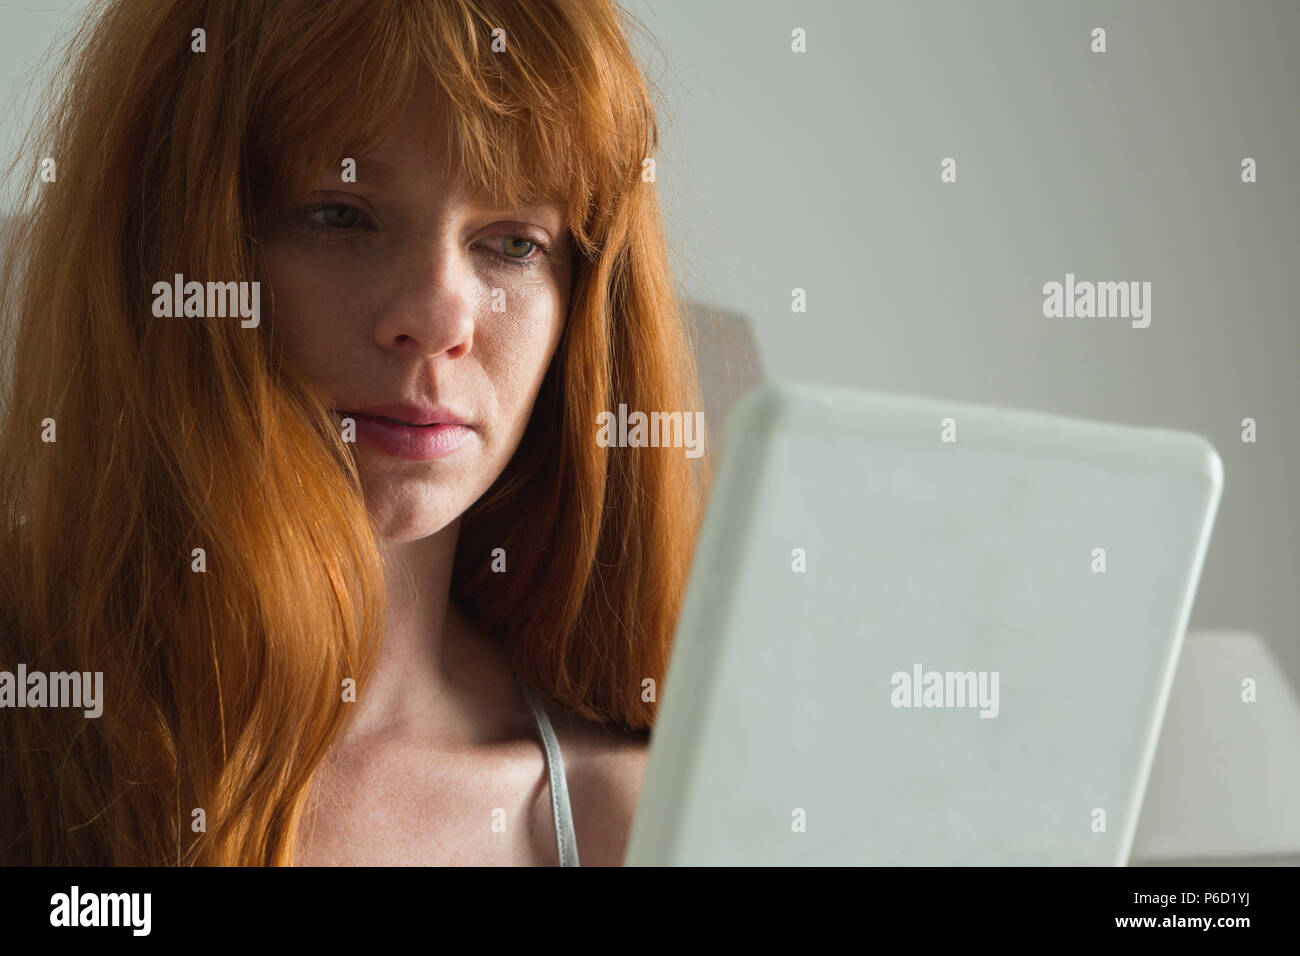 Woman using digital tablet in bedroom Banque D'Images